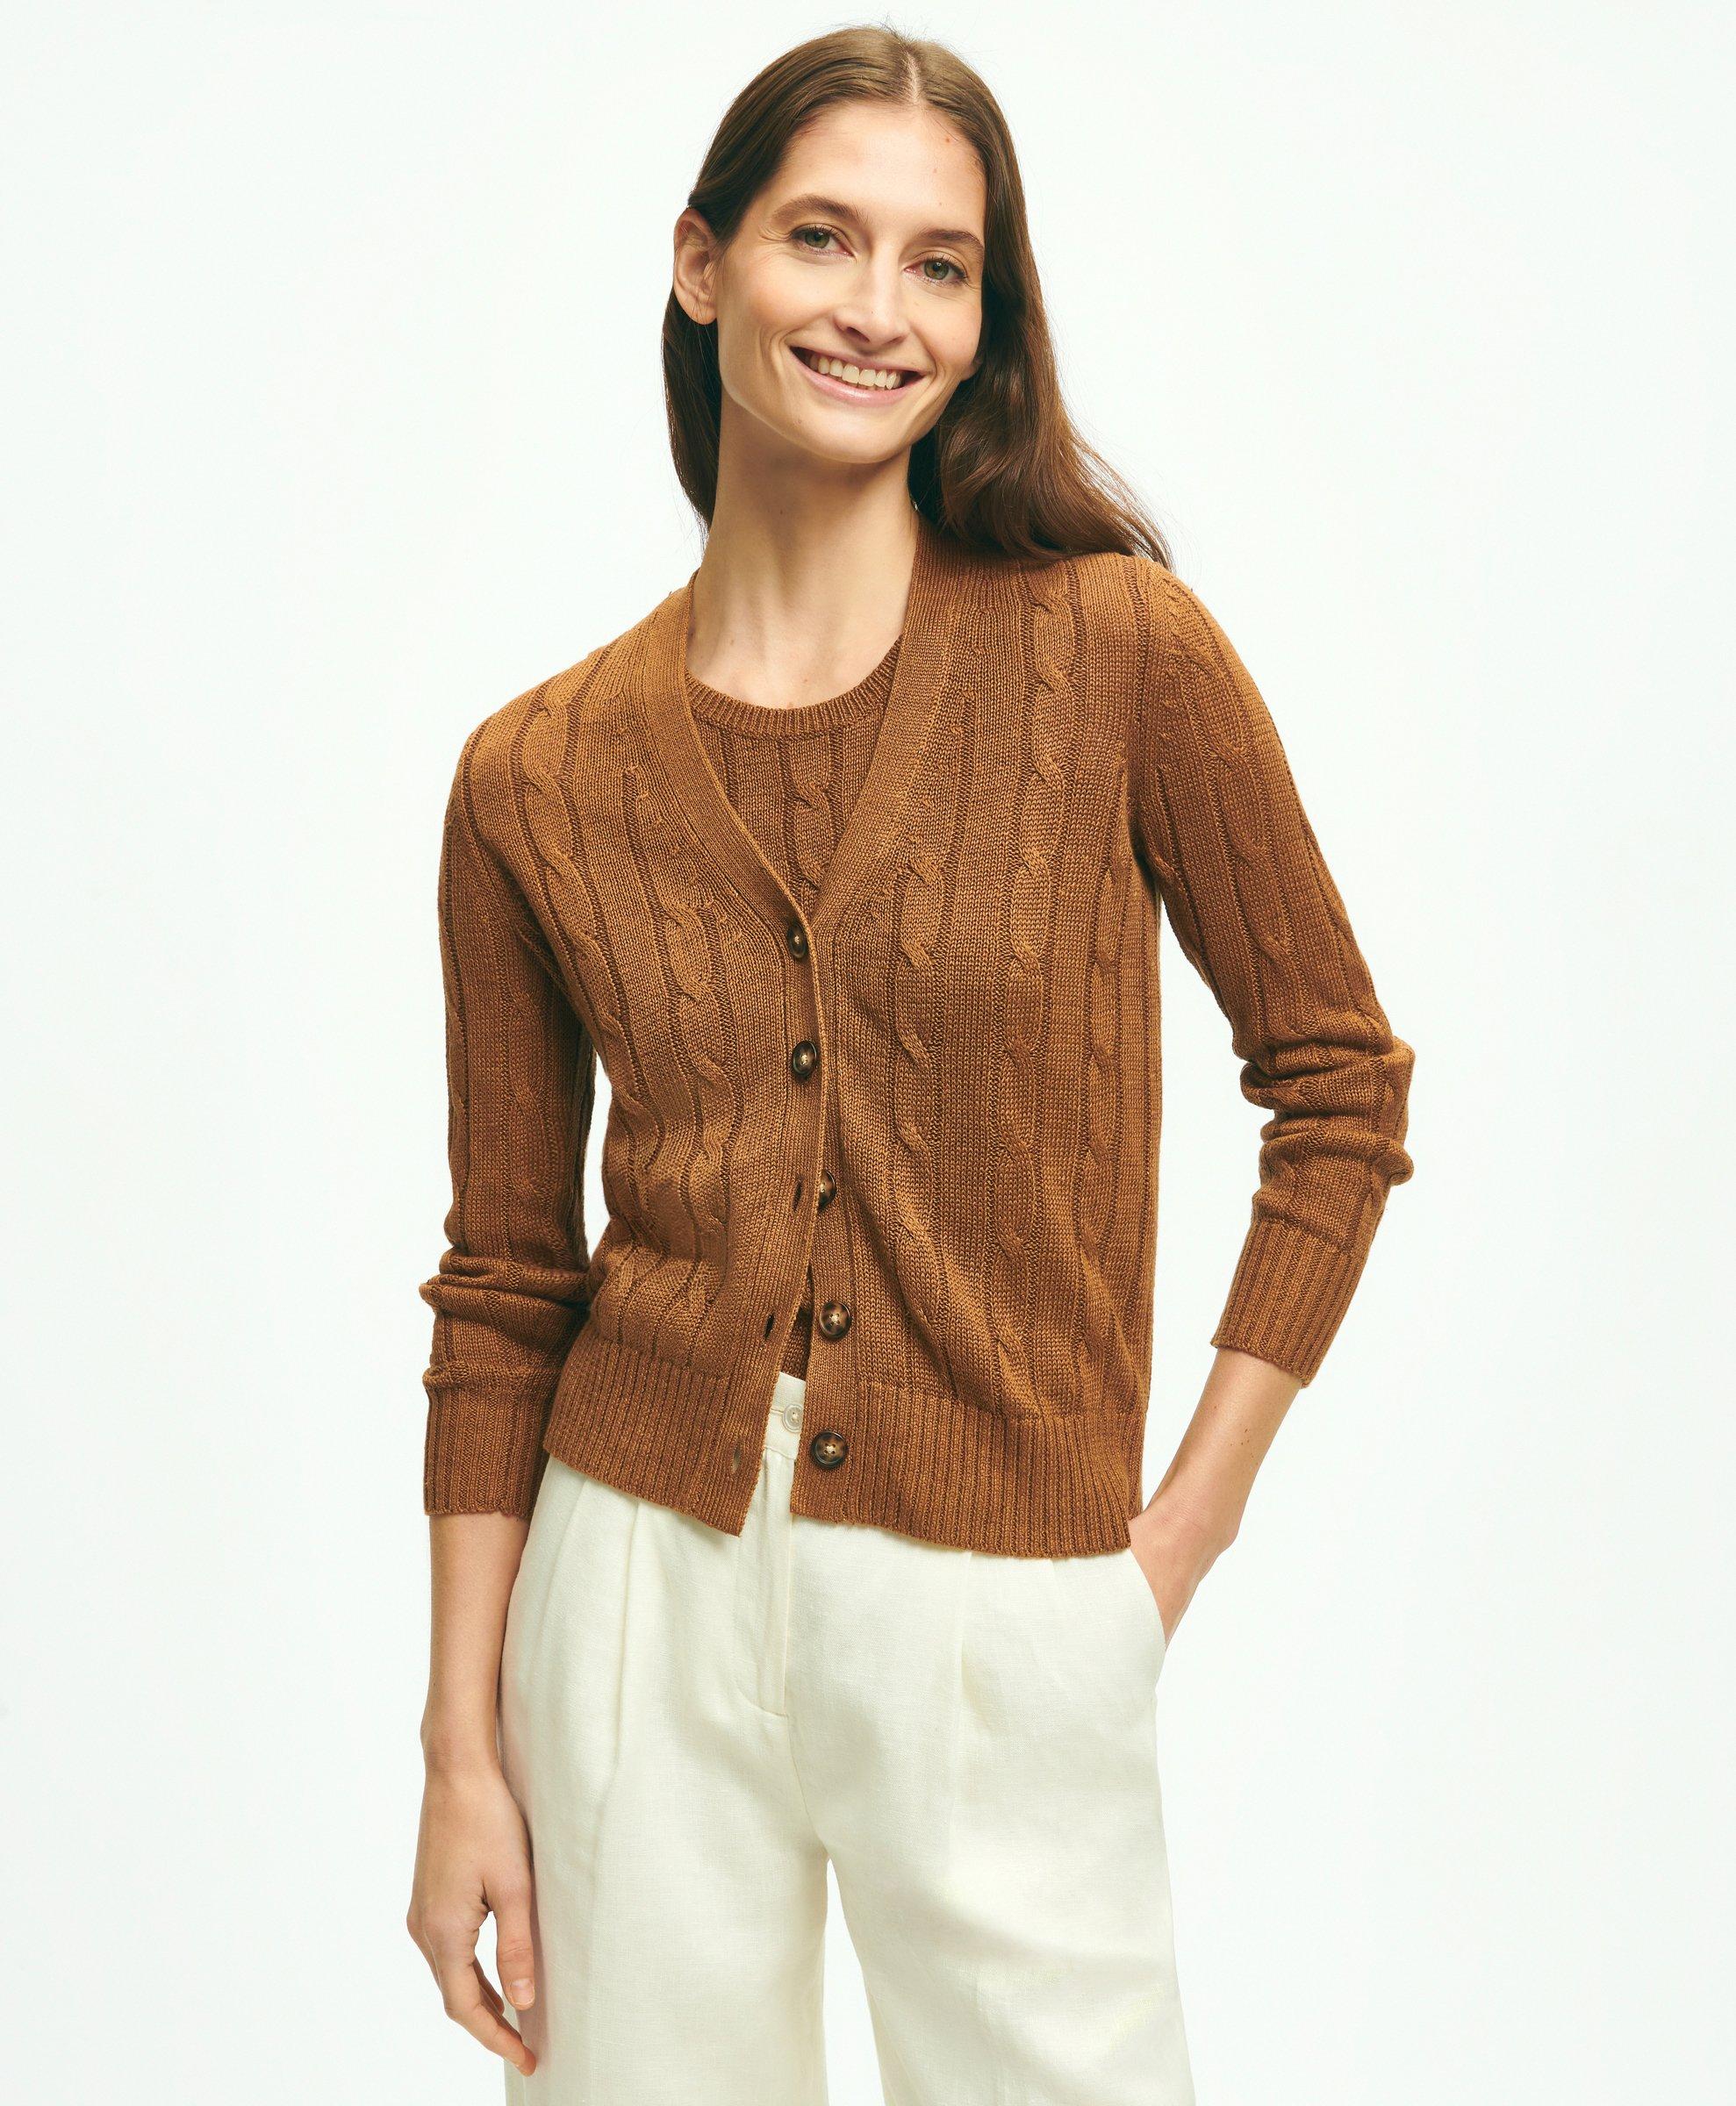 Shop Women's Sweaters, Premium Fabrics